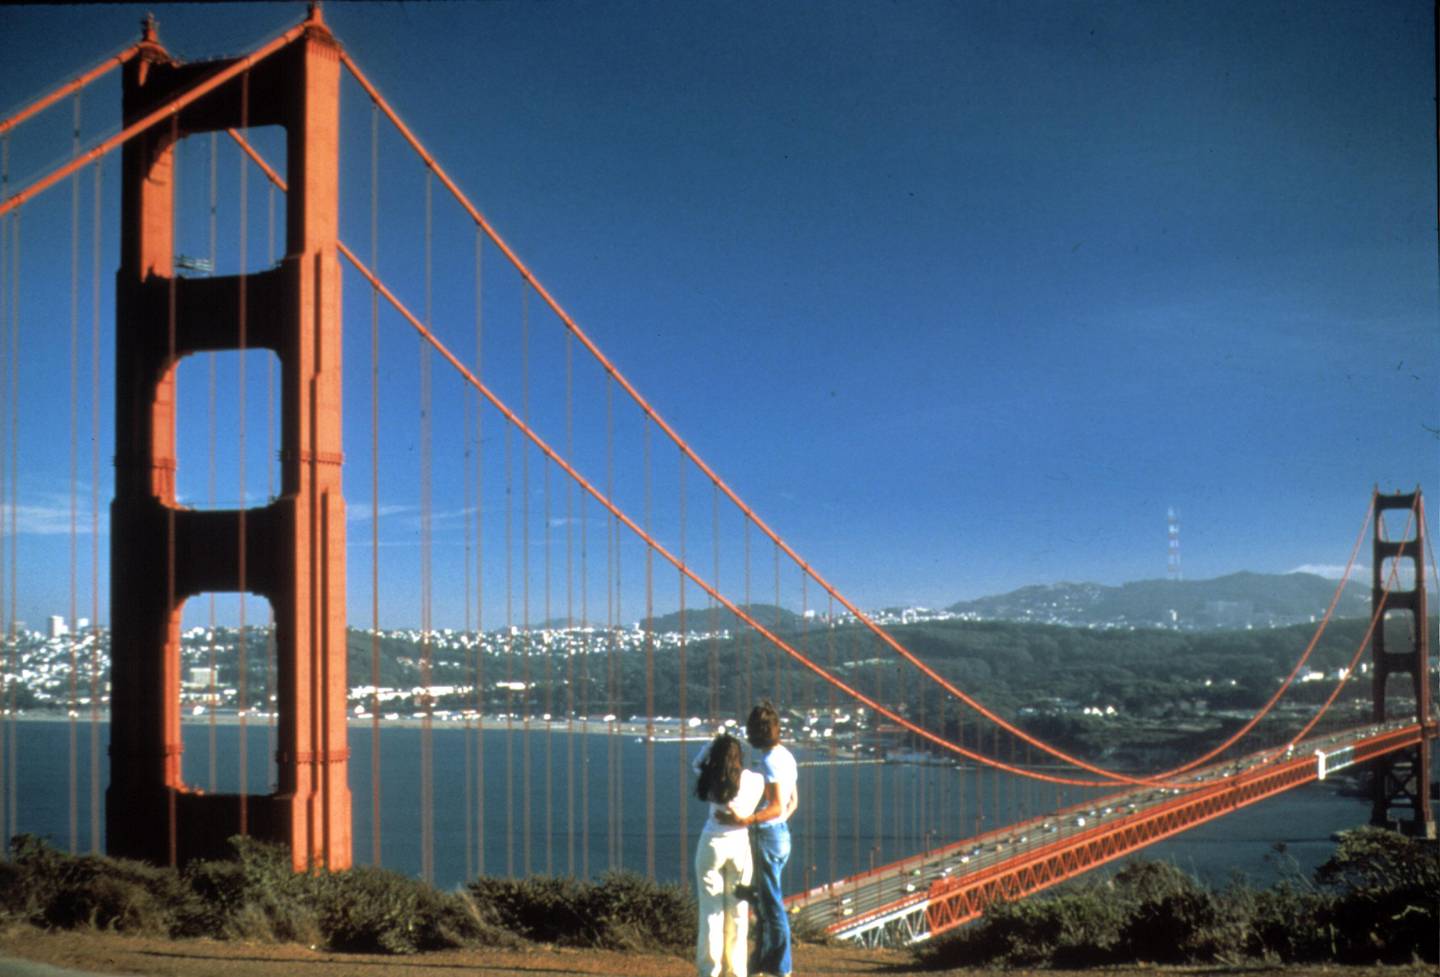 Golden Gate bridge, San Fransisco, USA.
Credit: SCANPIX